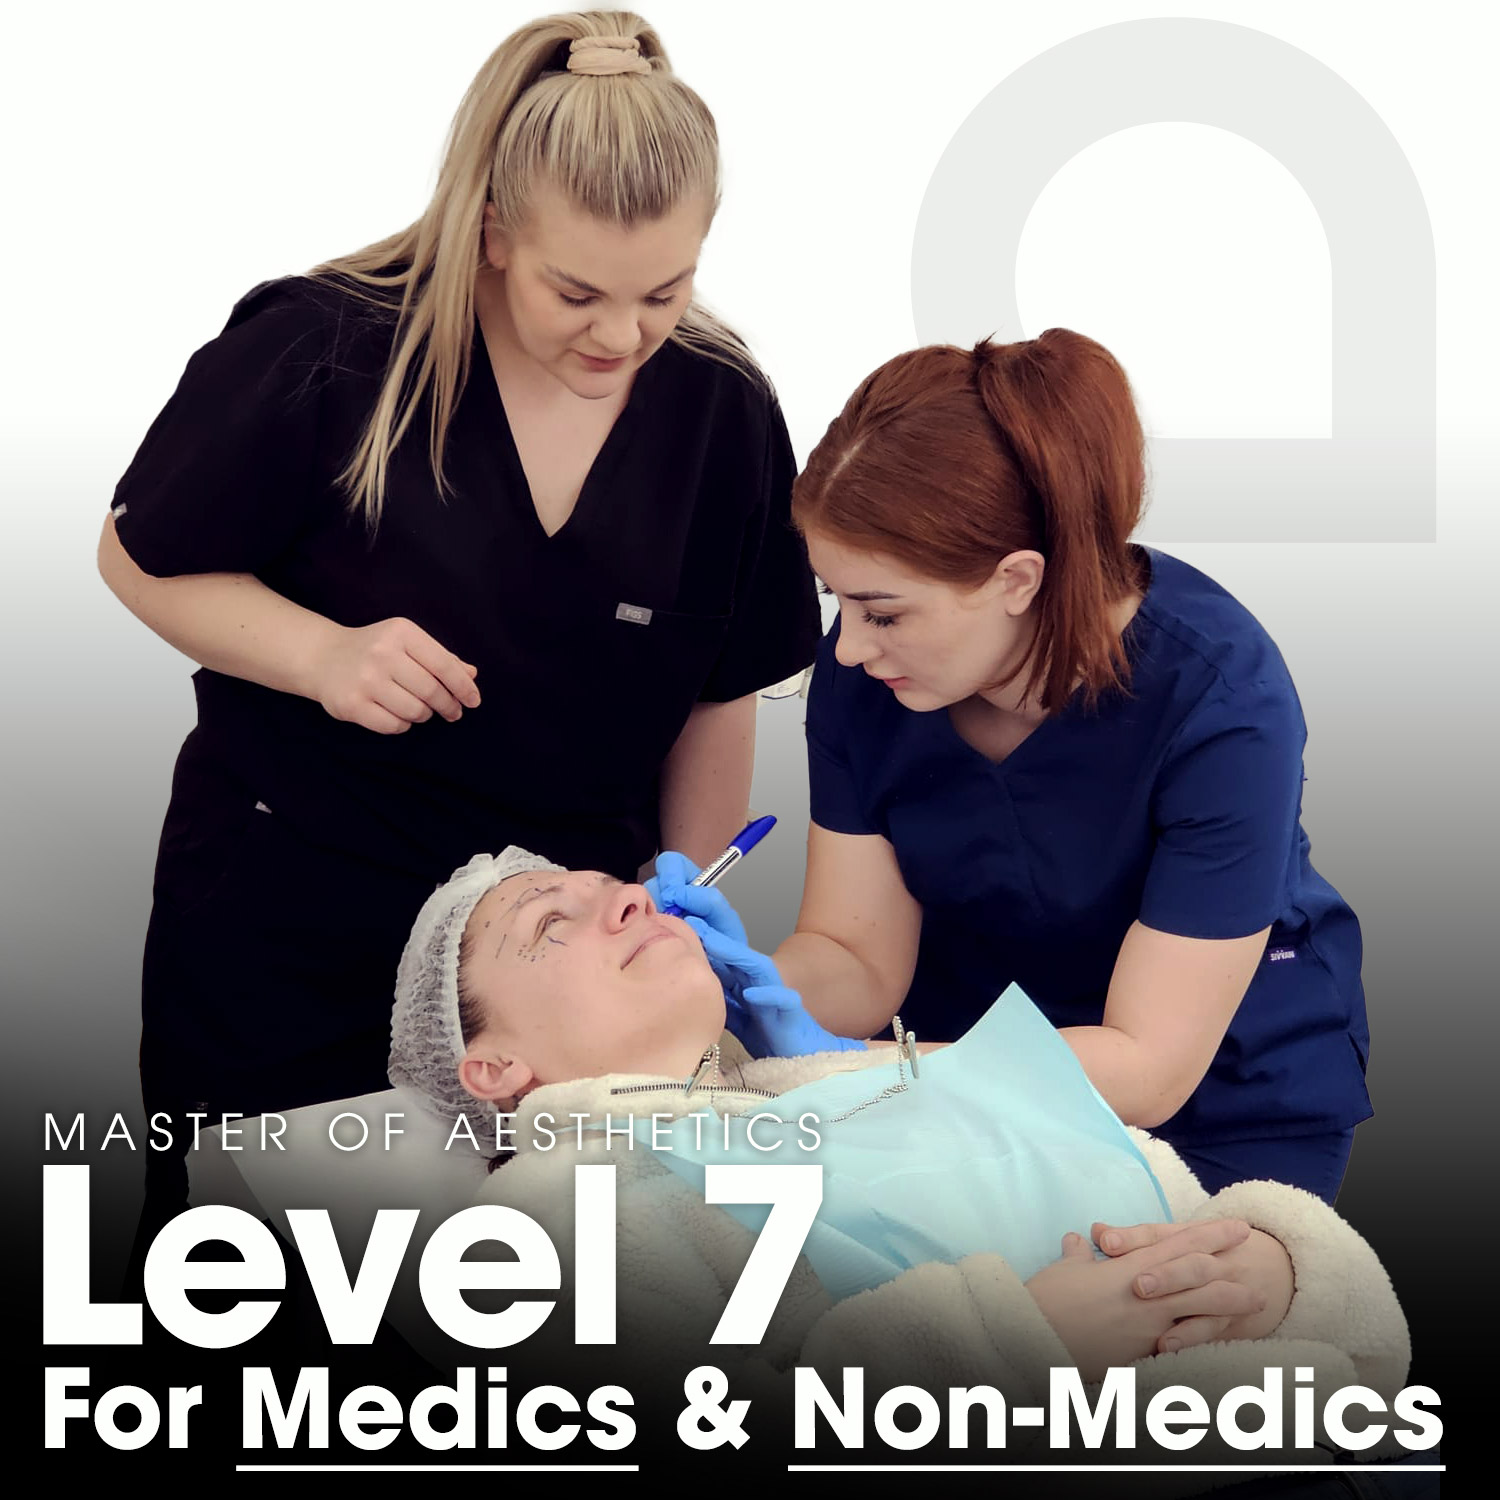 Level 7 Aesthetics for Non-medics and medics